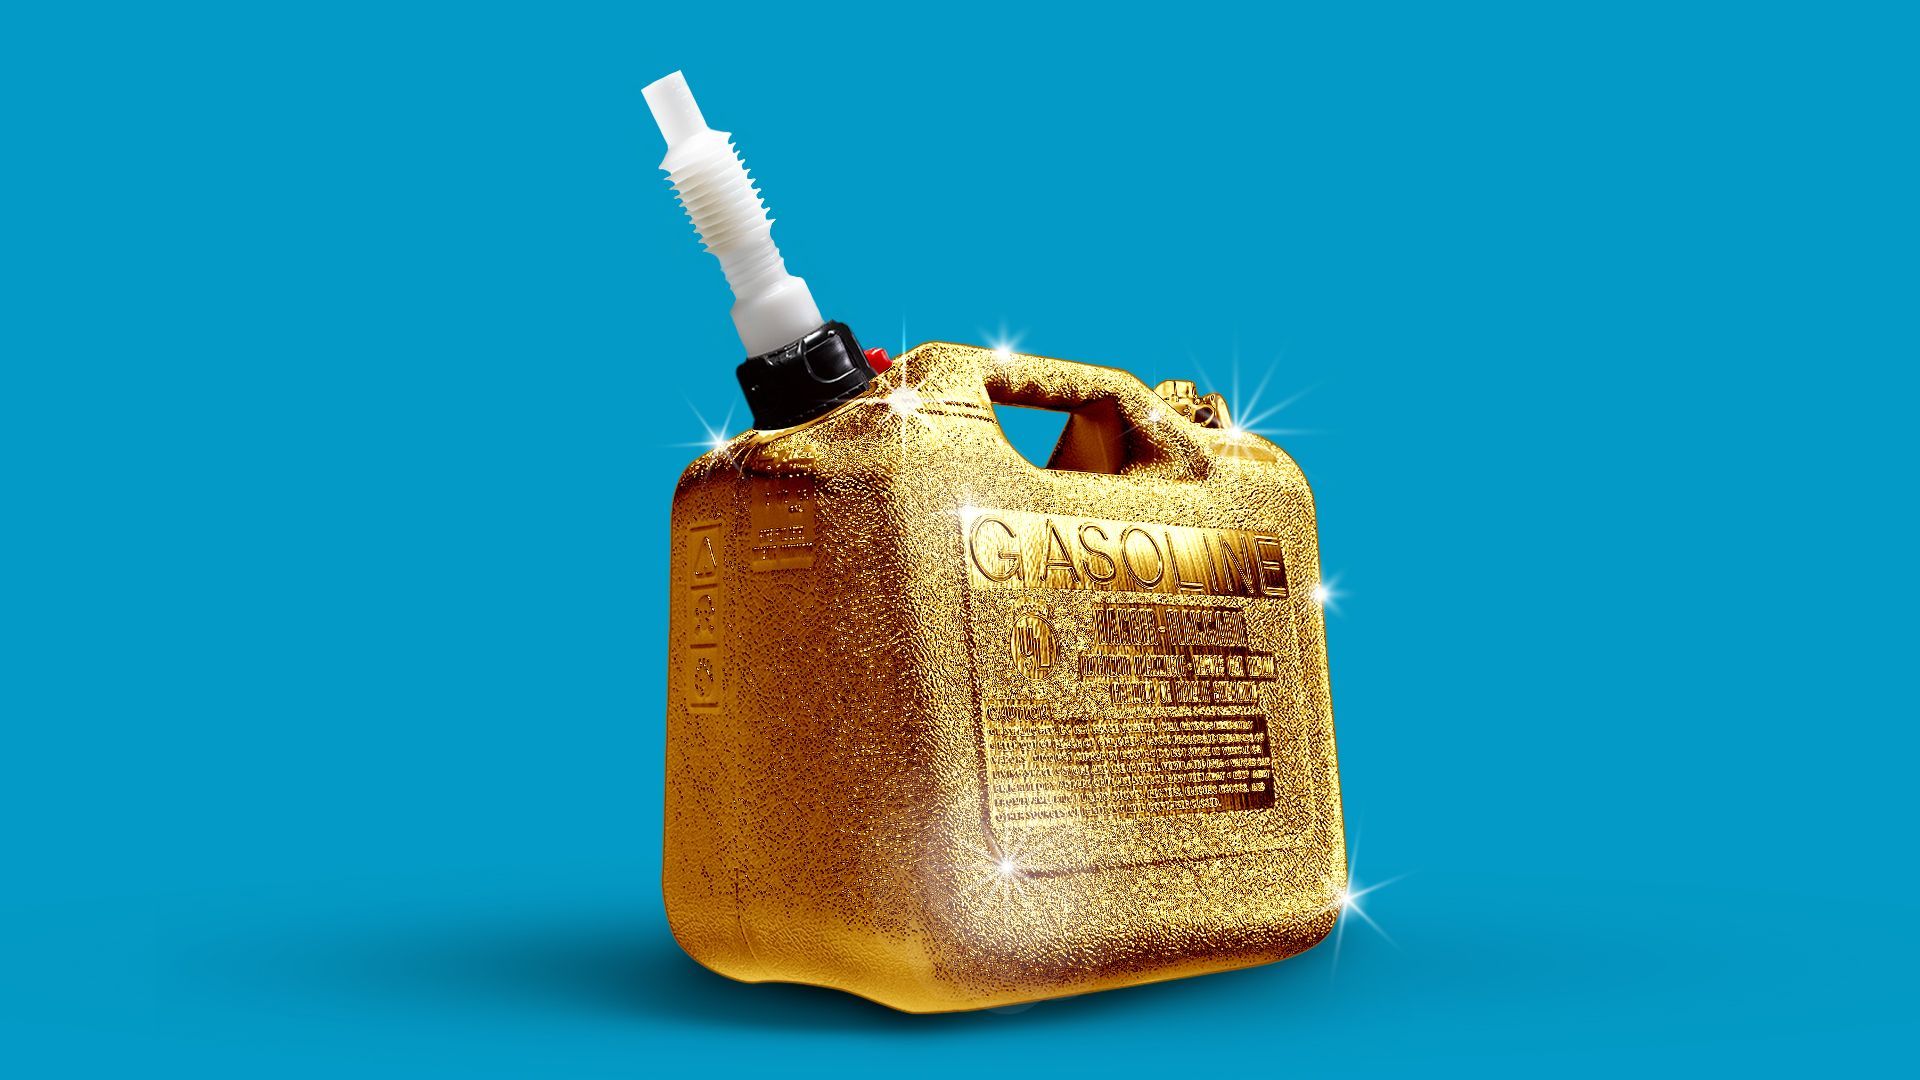 Illustration of a golden gasoline can